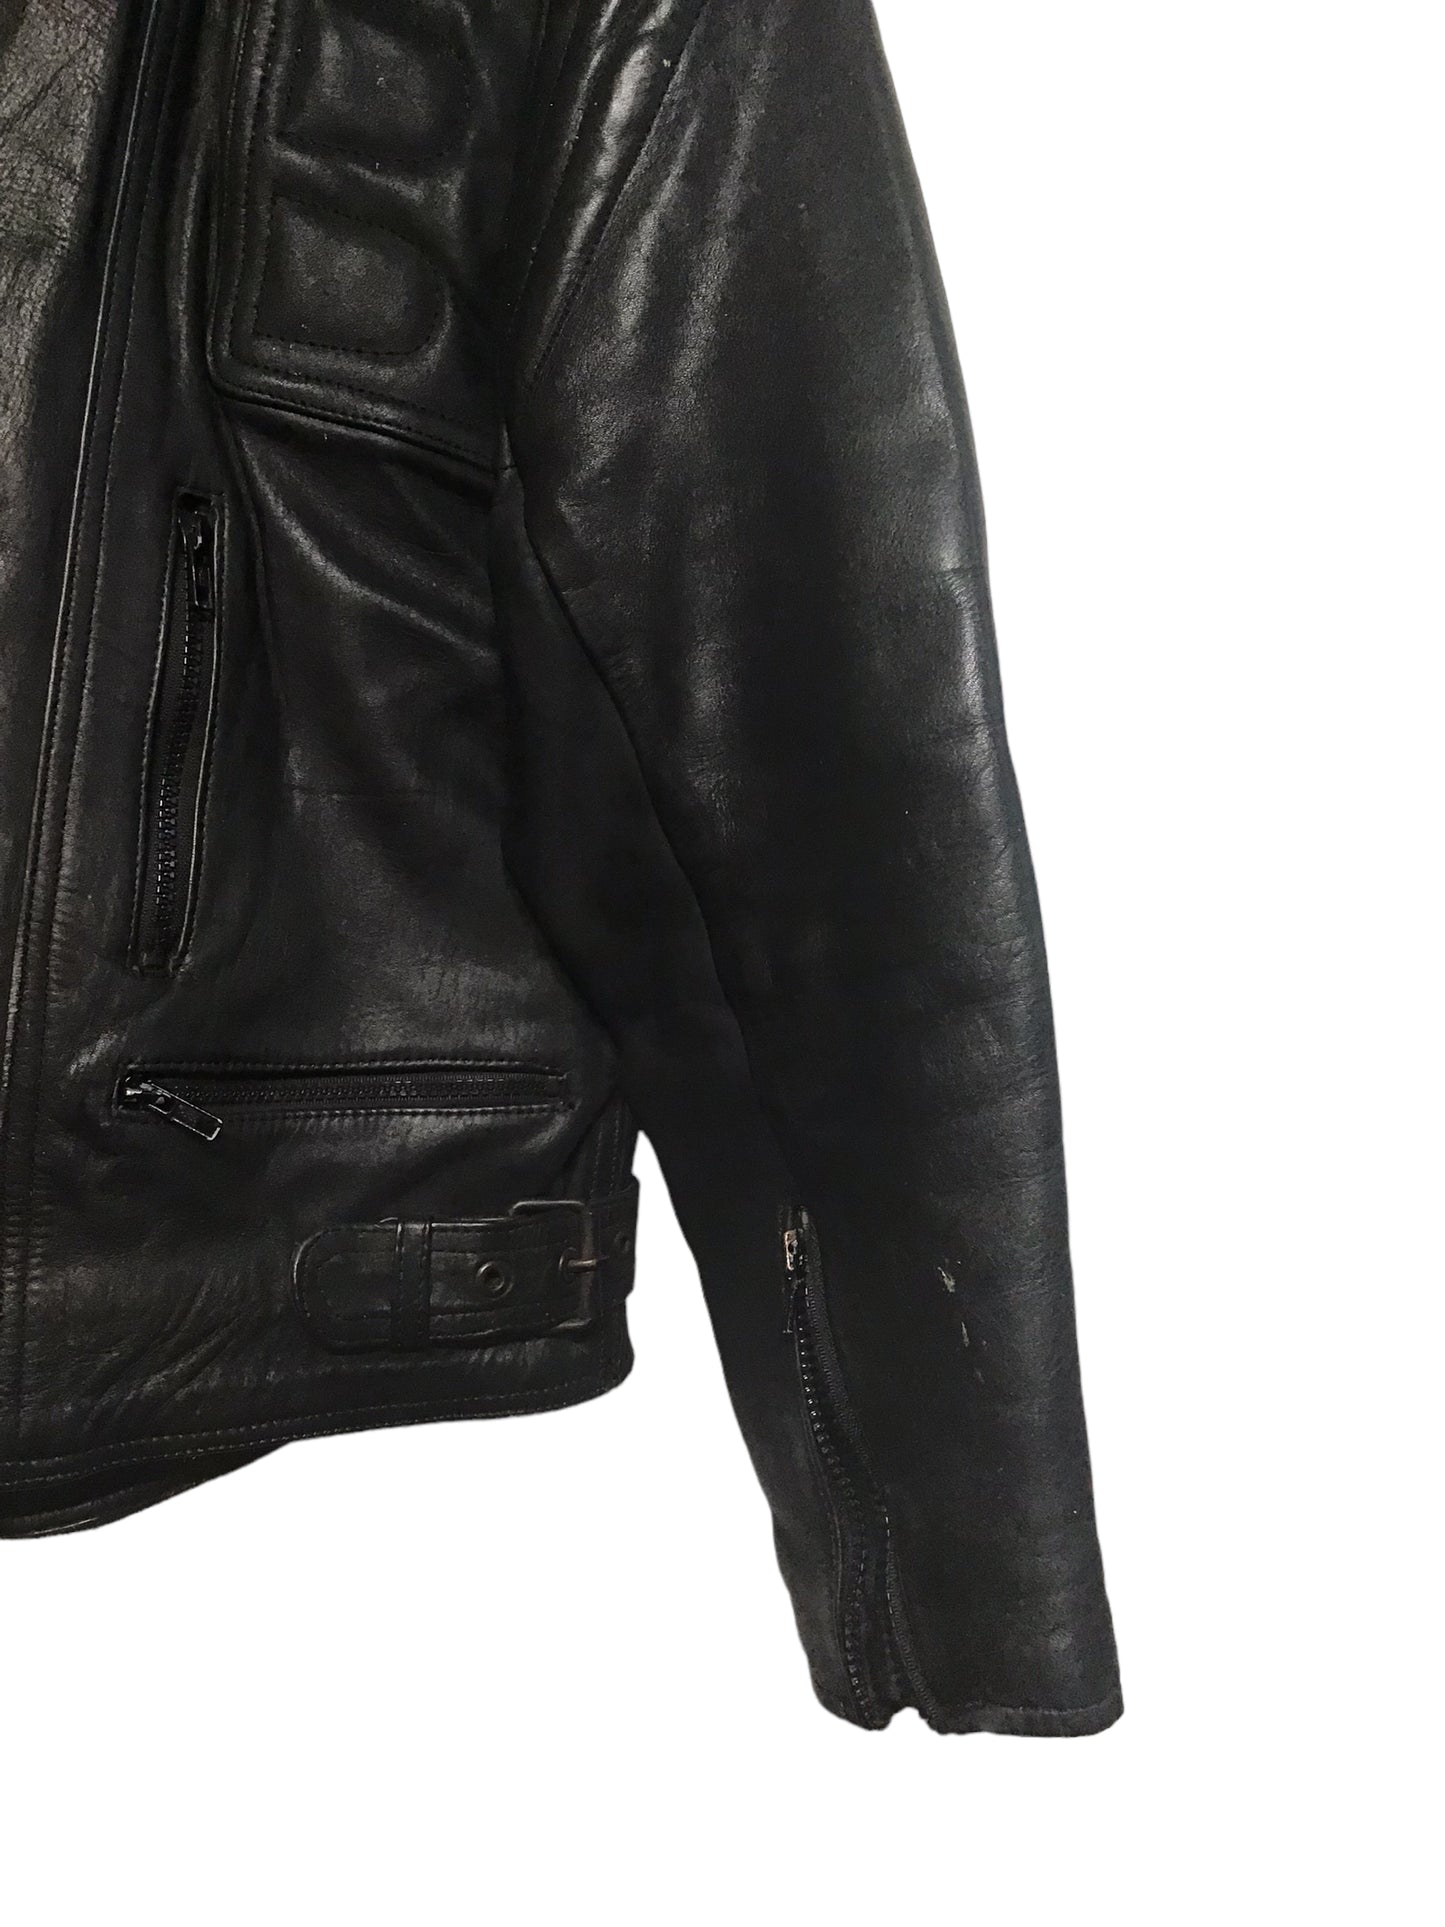 Genuine Leather Biker Jacket (Size M)